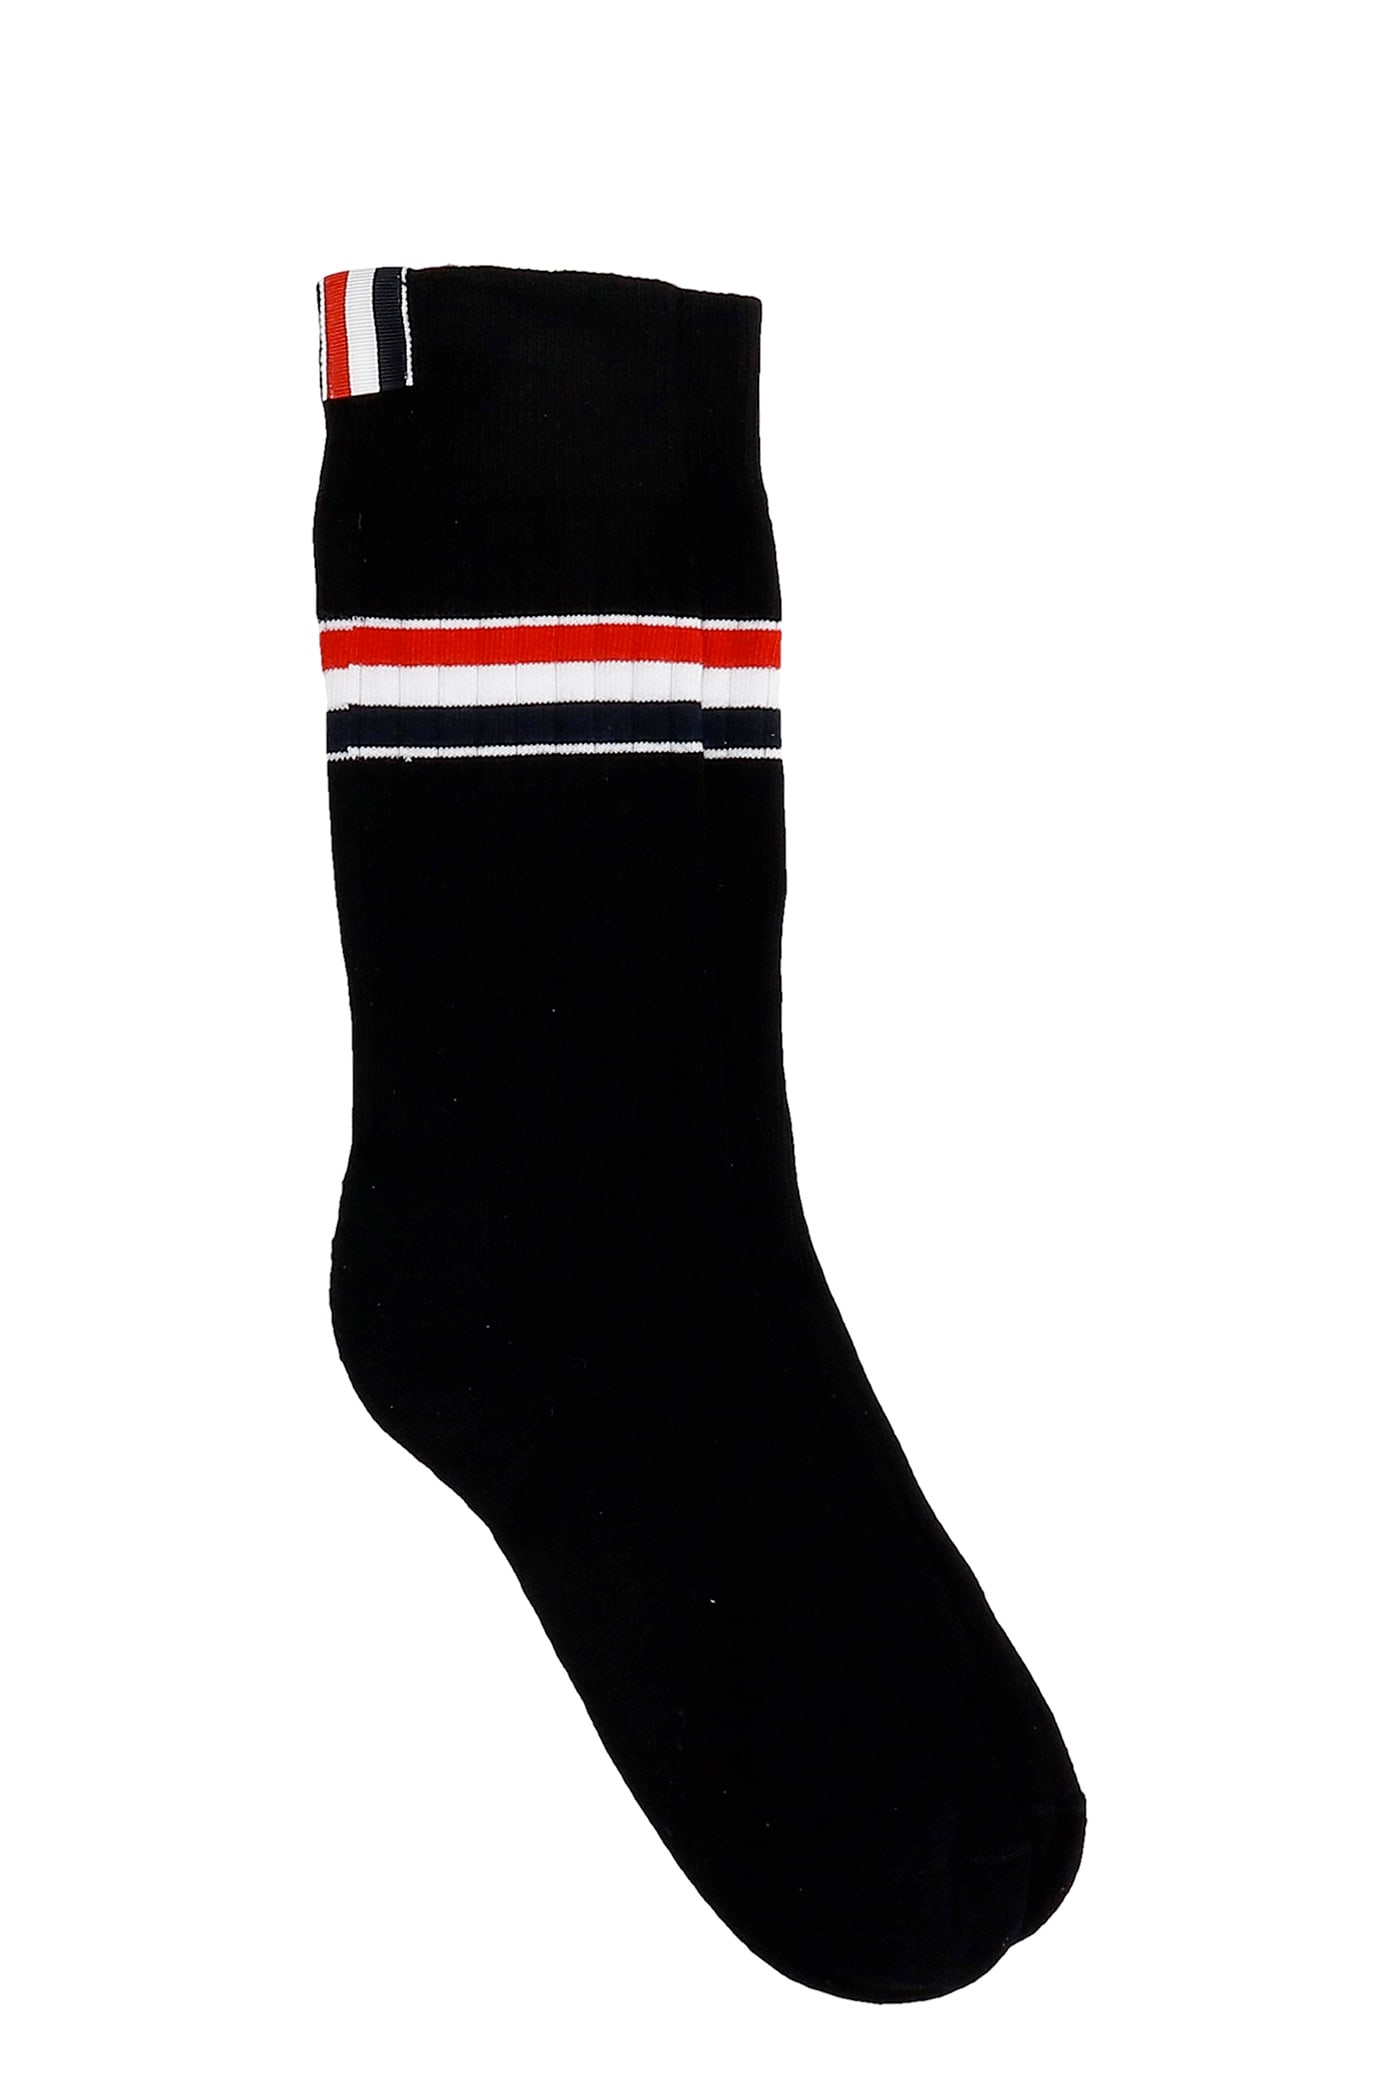 Thom Browne Socks In Black Cotton